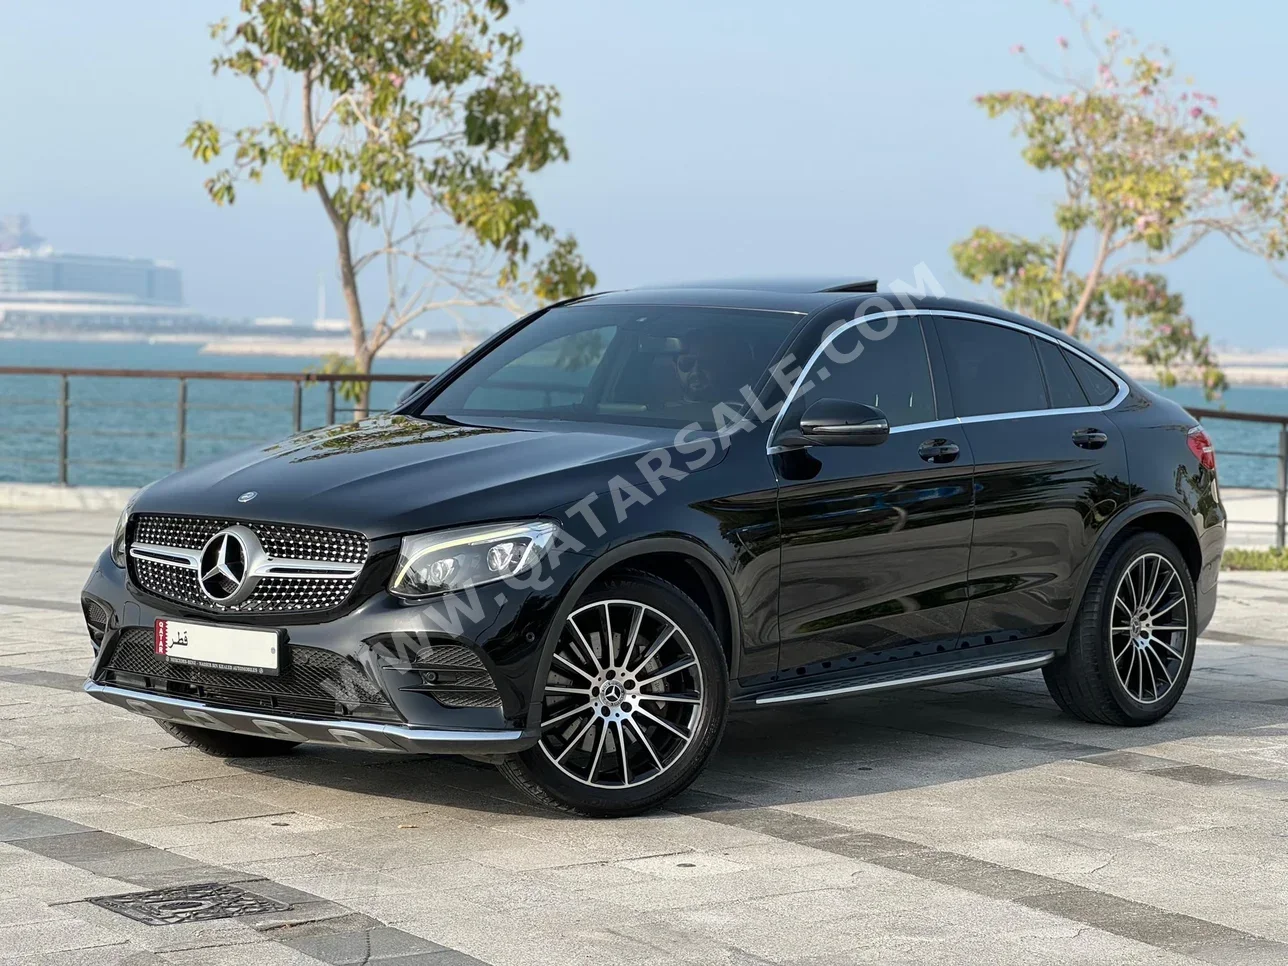  Mercedes-Benz  GLC  250  2017  Automatic  52,000 Km  4 Cylinder  All Wheel Drive (AWD)  SUV  Black  With Warranty